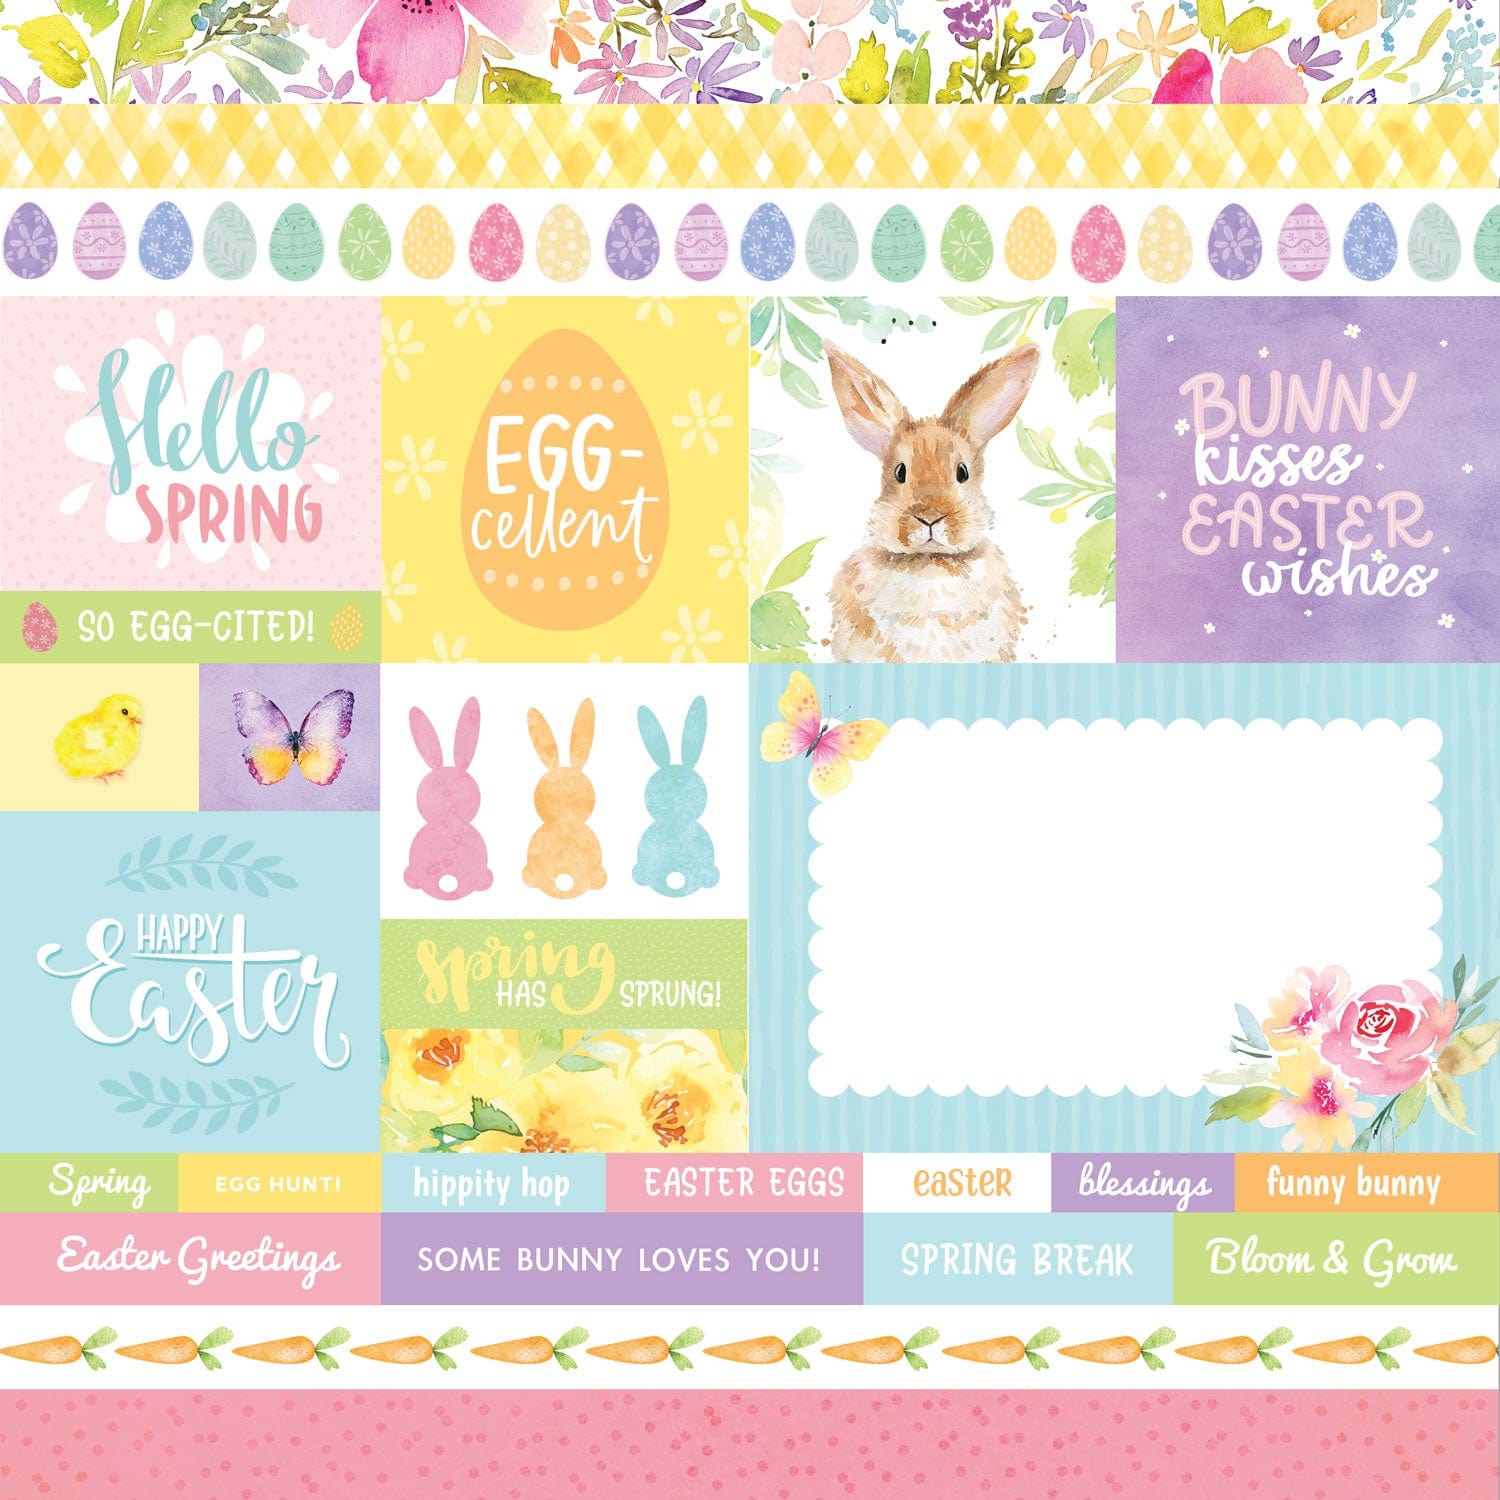 Bunnies & Blooms Stickers 12x12